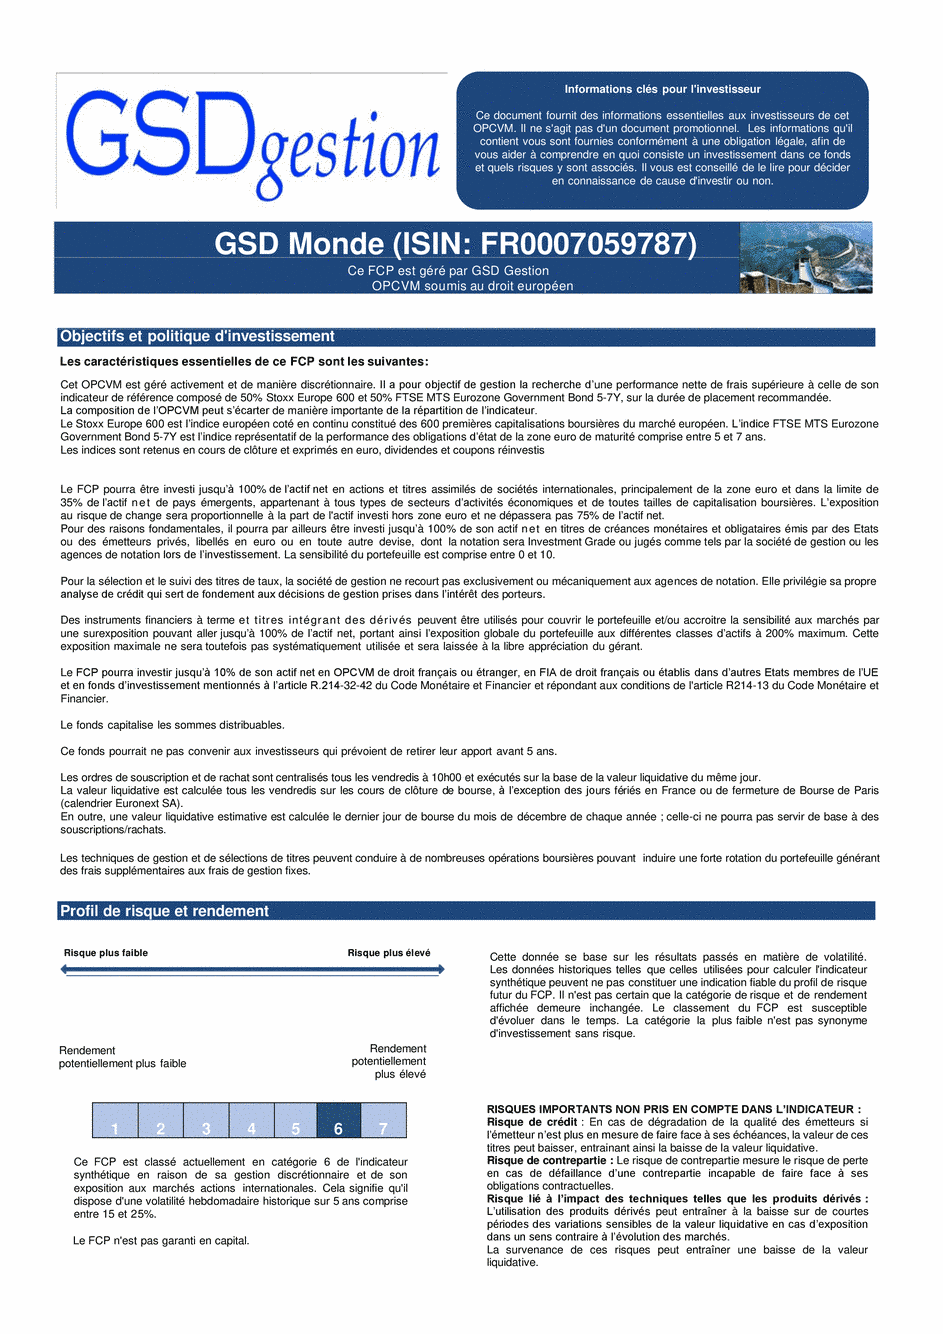 DICI-Prospectus GSD Monde - 15/04/2021 - Français